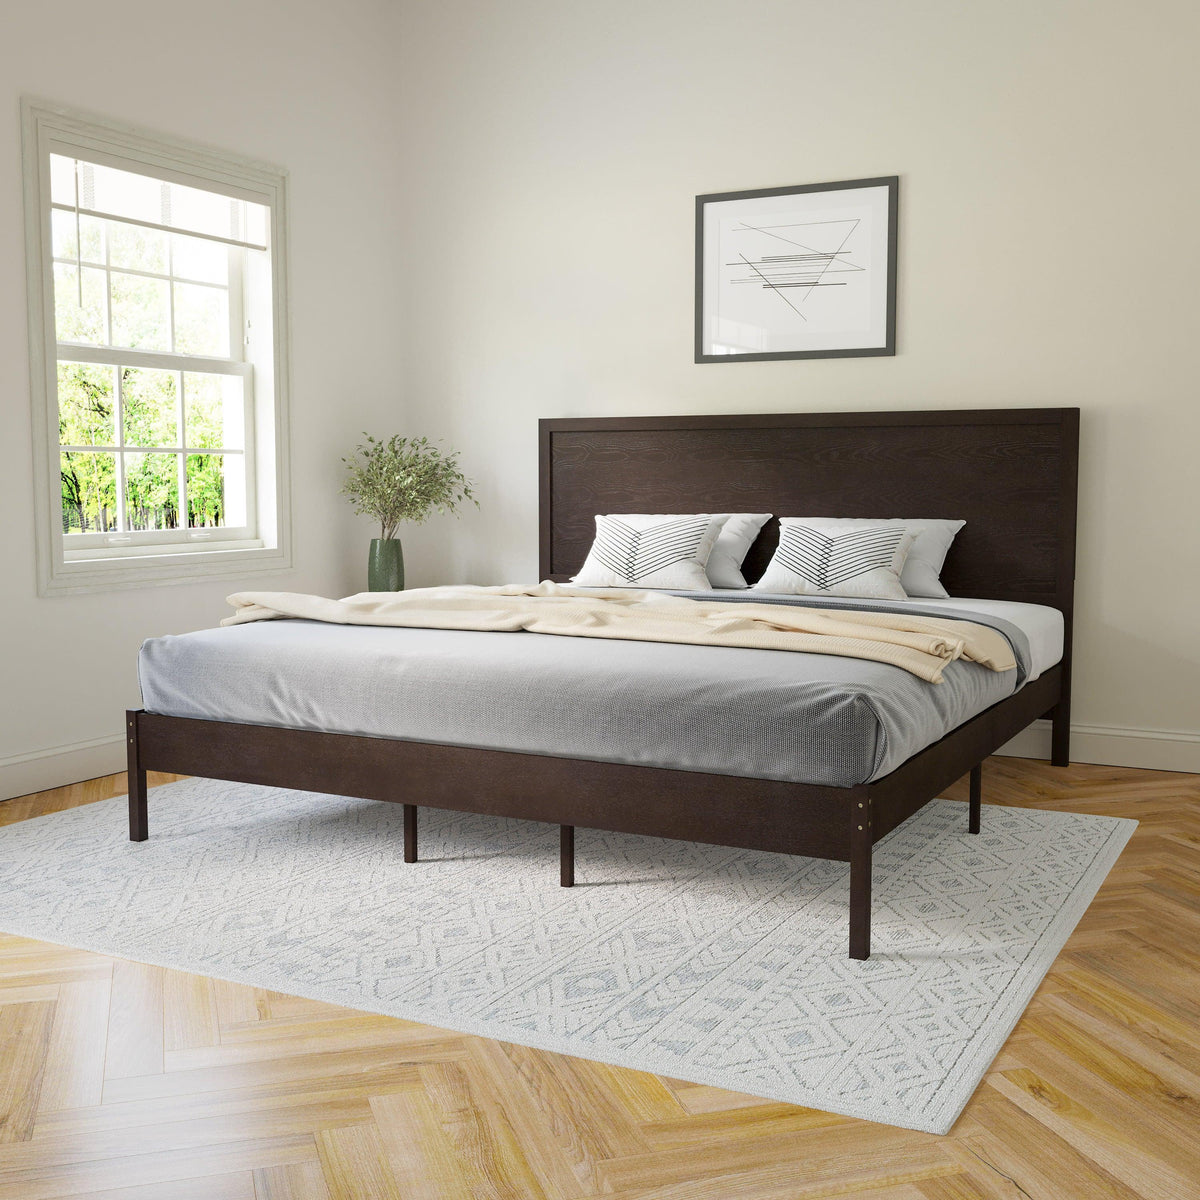 Dark Brown,King |#| Solid Wood Platform Bed with Headboard and Wooden Slats in Dark Brown - King